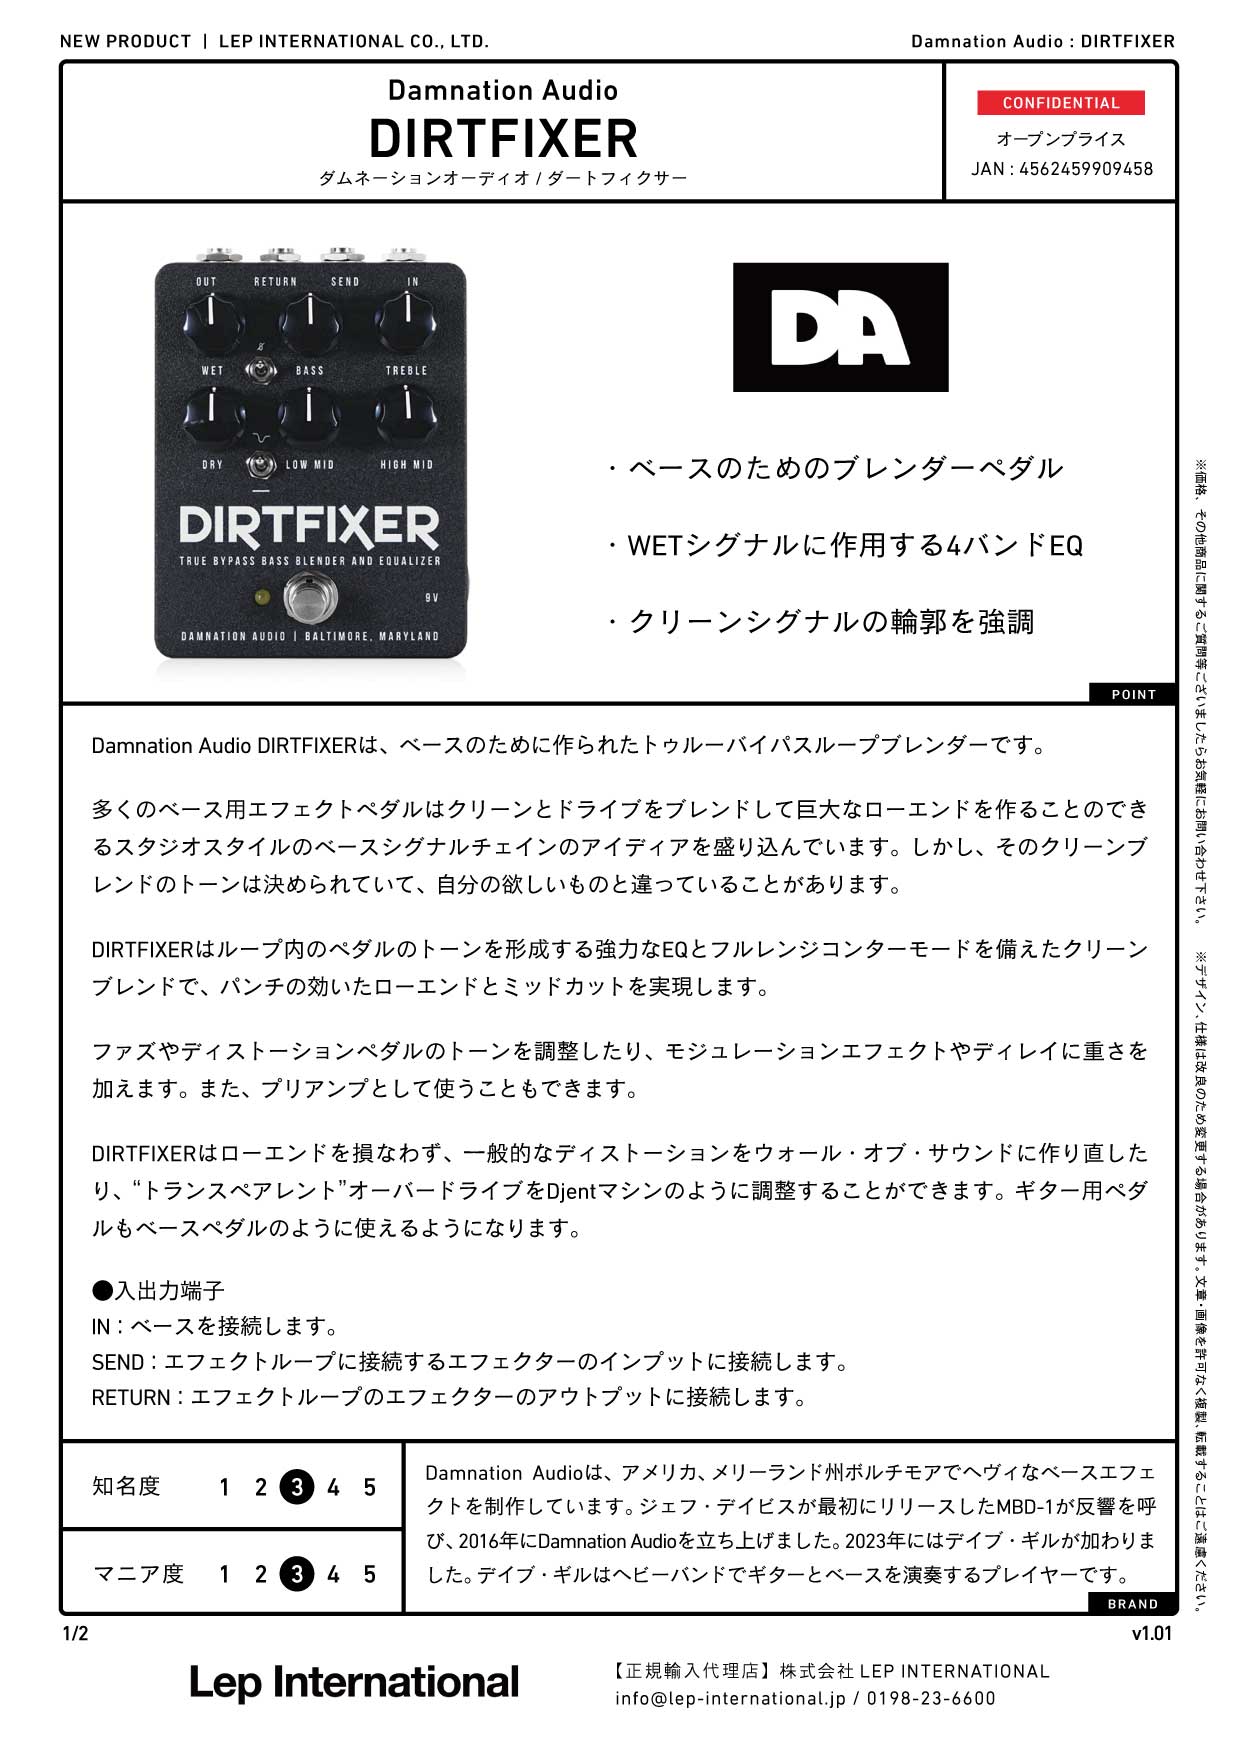 Damnation Audio / DIRTFIXER